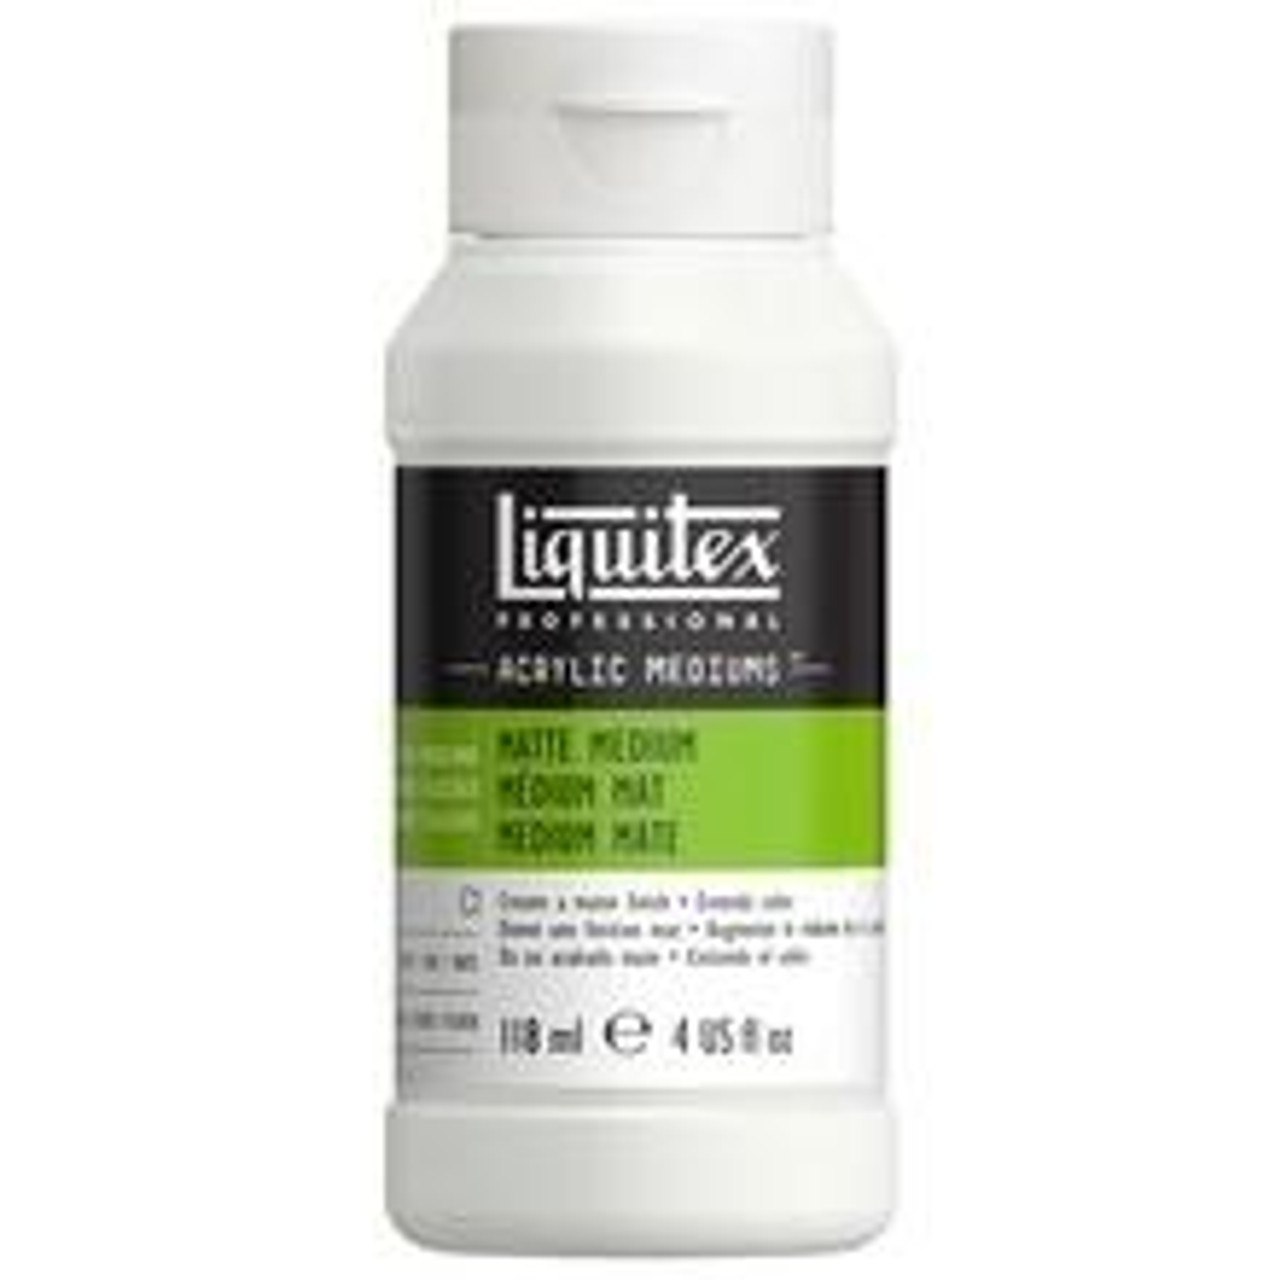 Liquitex Fluid (Medium Gloss)